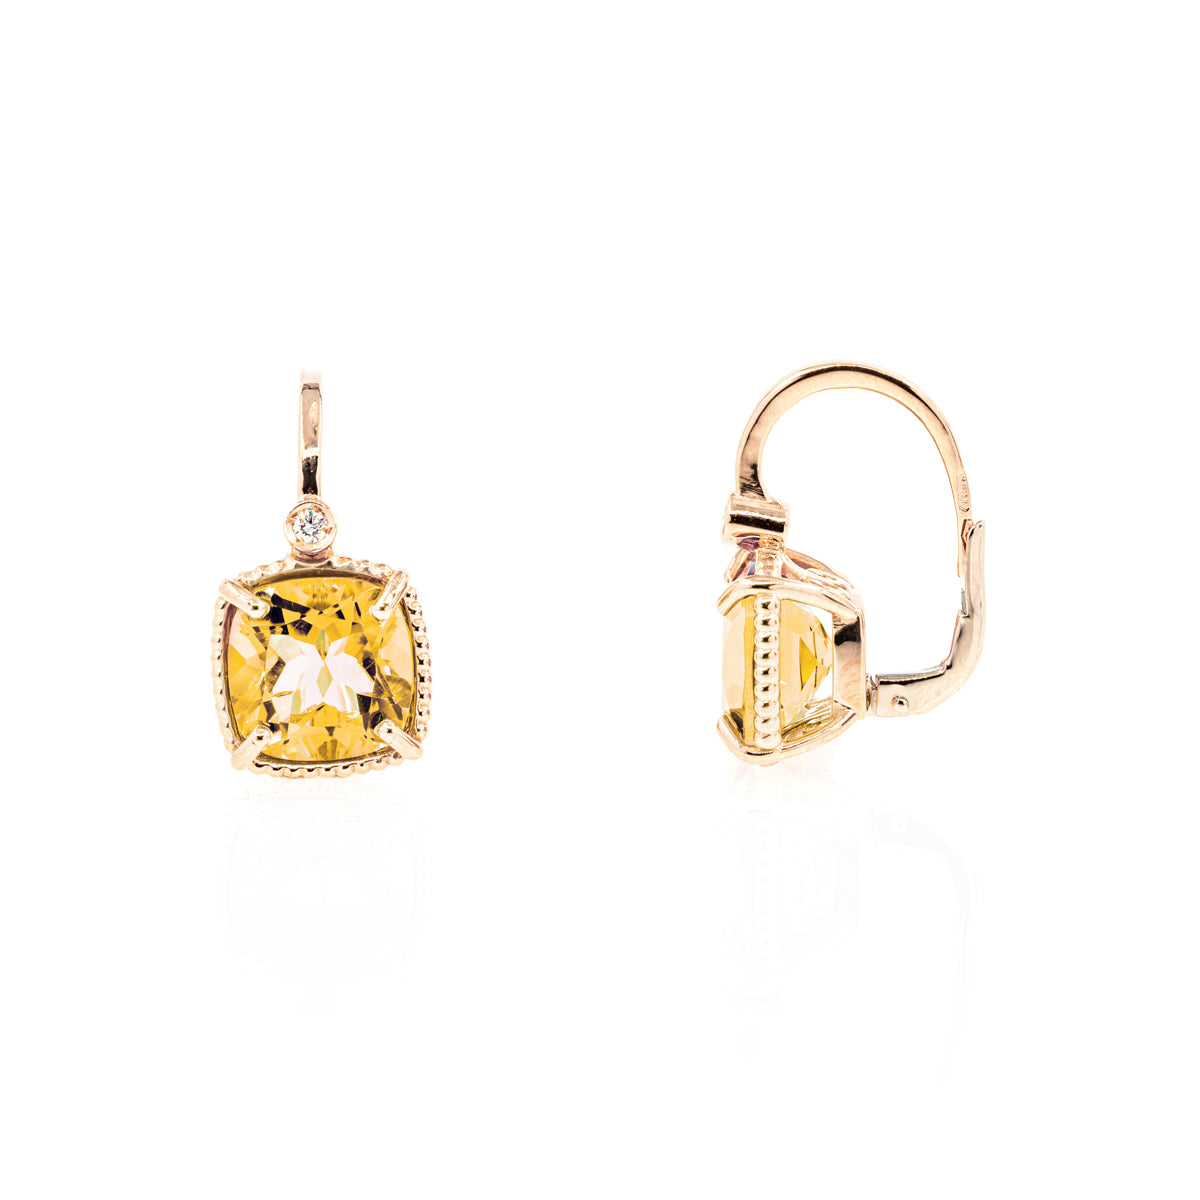 Diana 401 citrine earrings